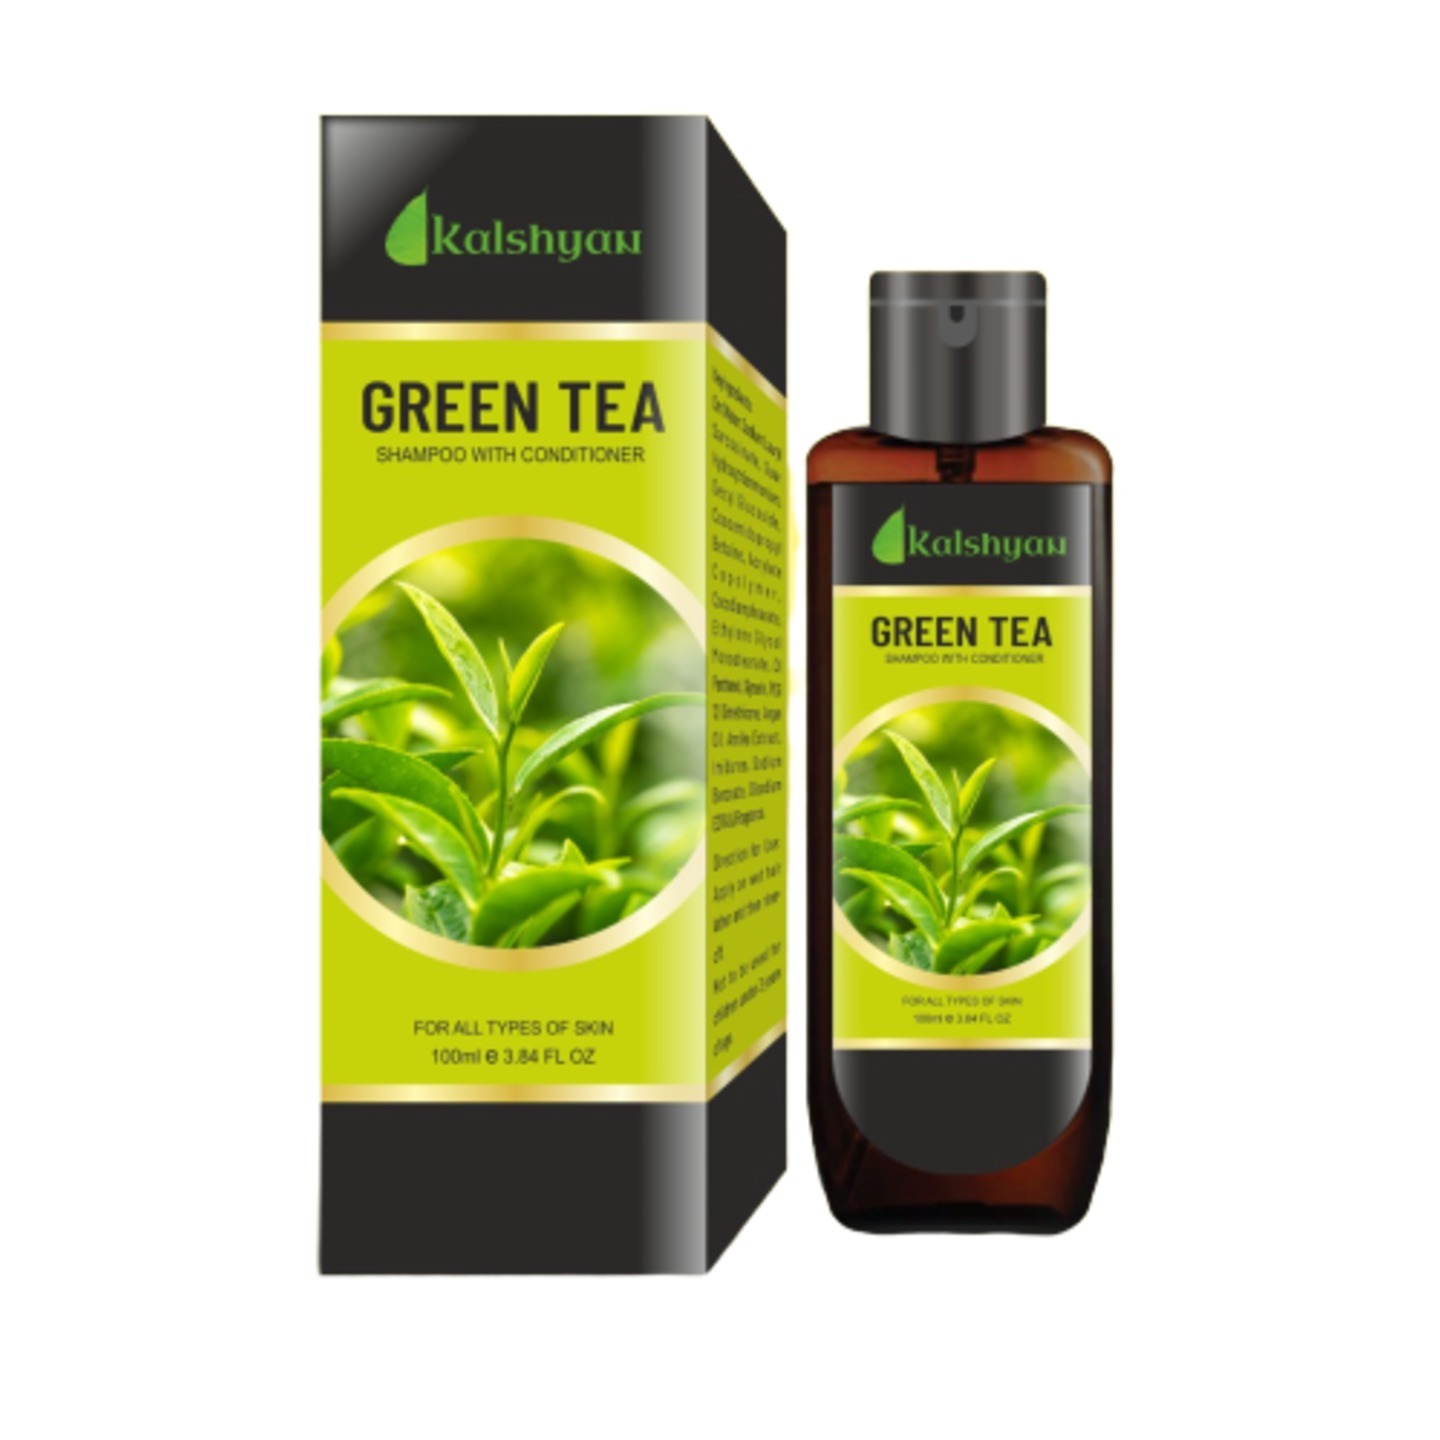 Green Tea Shampoo with Conditioner